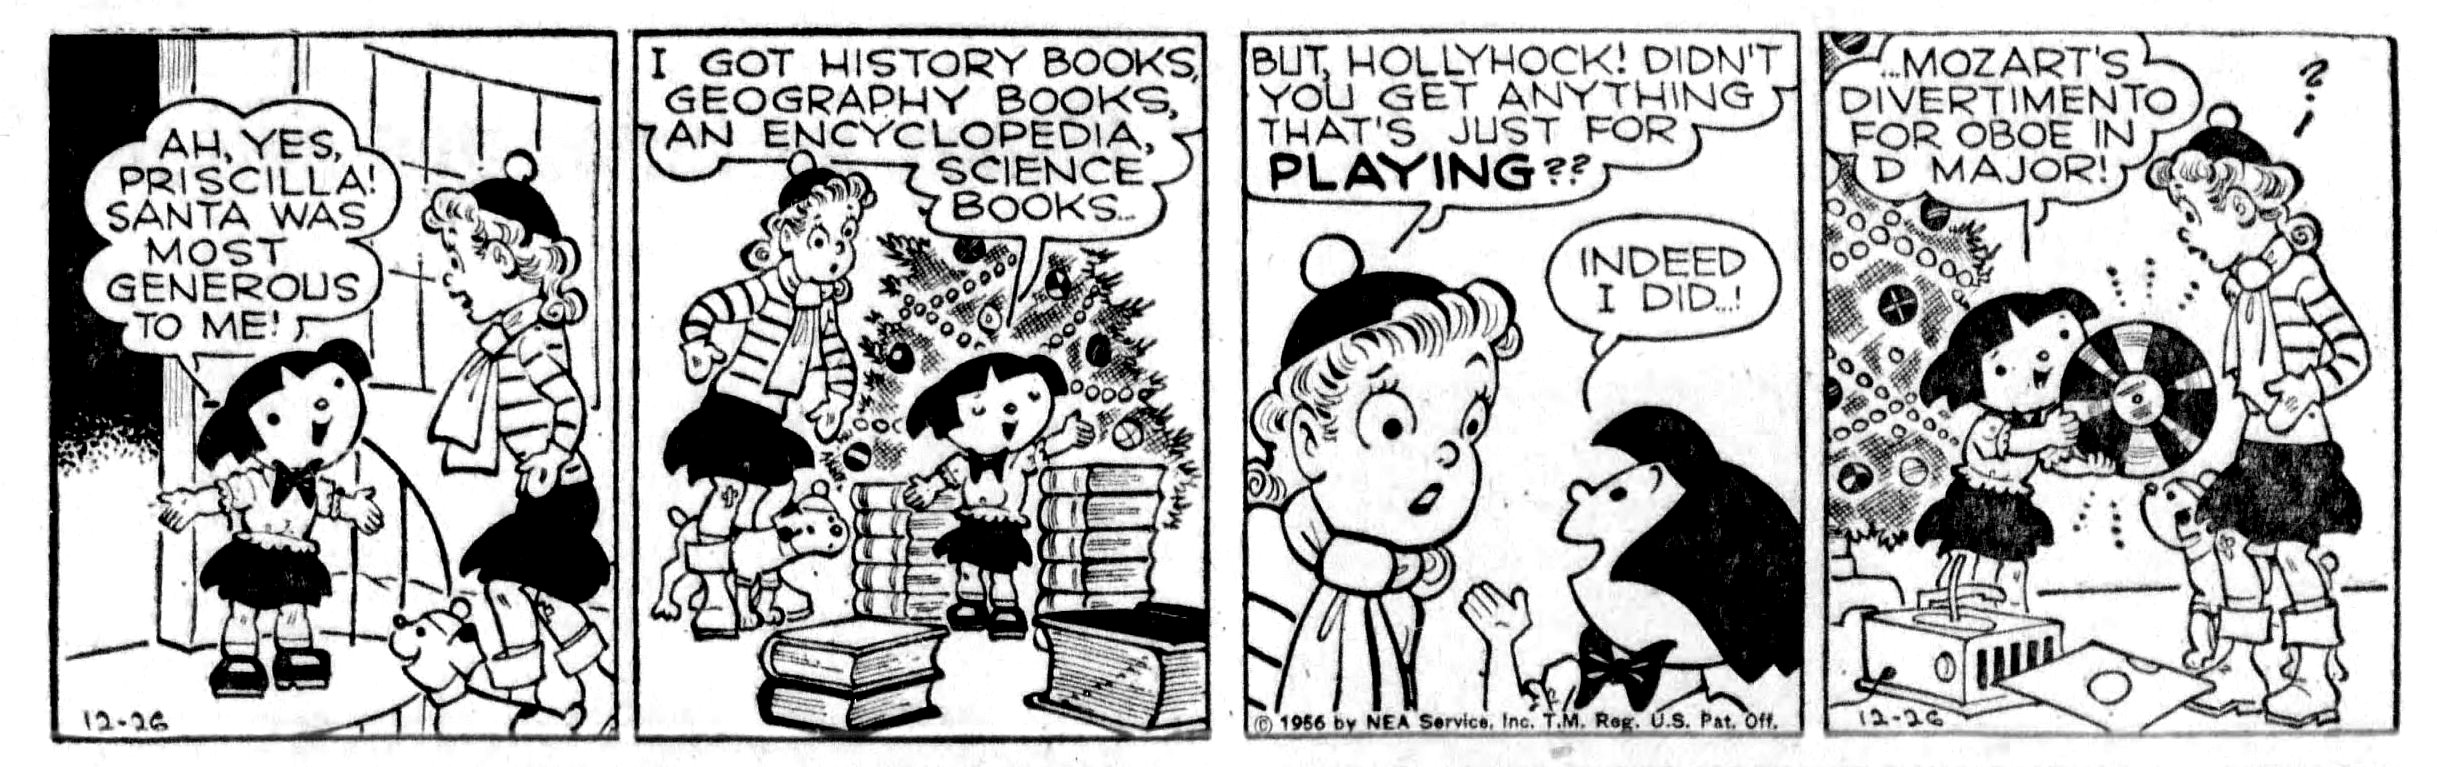 Priscilla's Pop, December 26, 1956